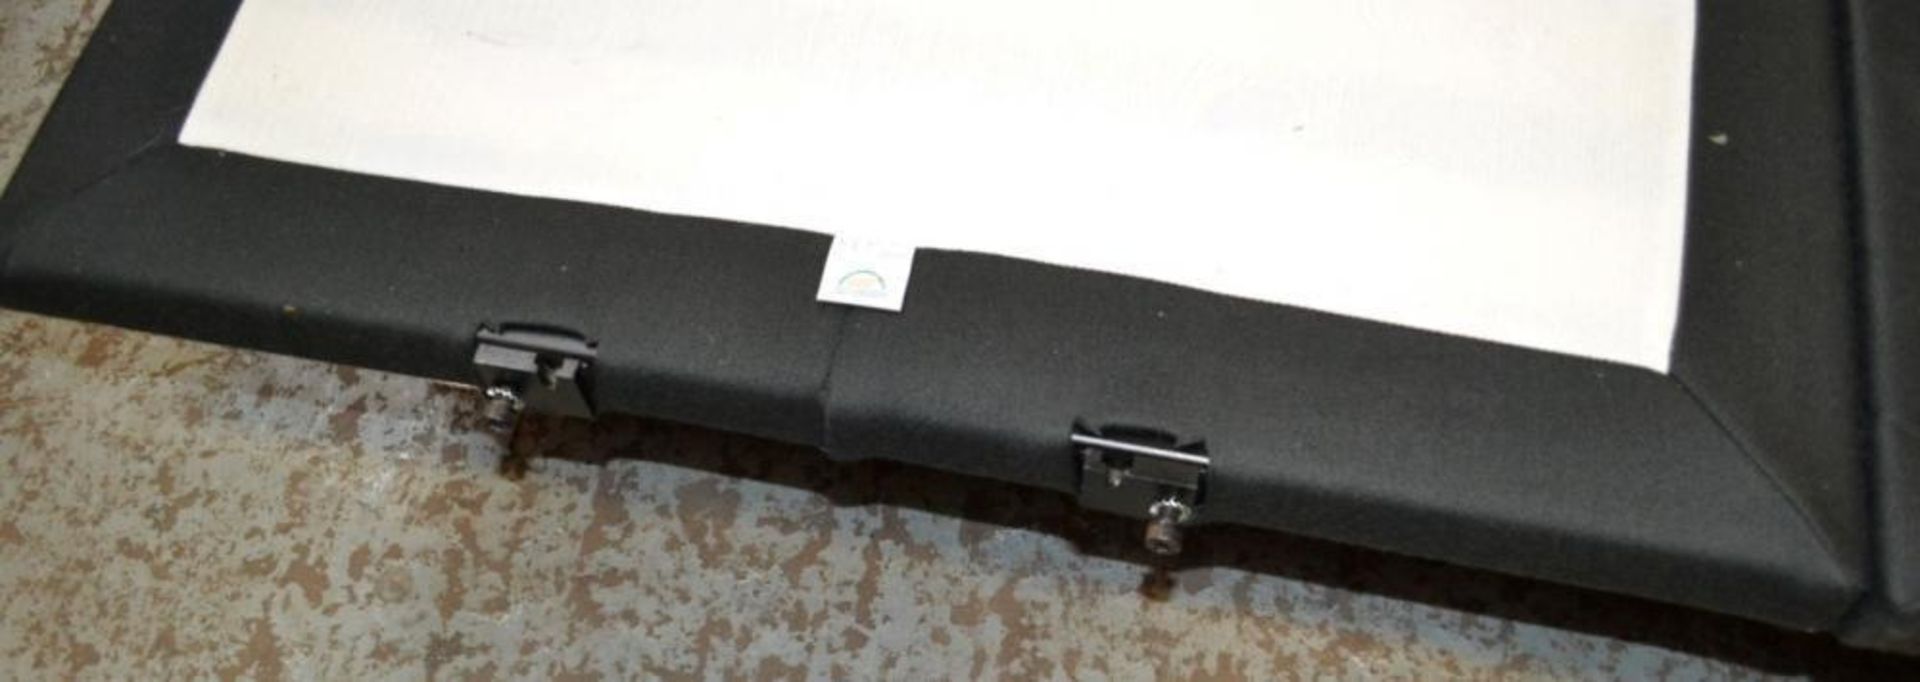 1 x Jensen EDEN Adjustable Superking Bed Base - W180 x L210 x H34cm - Colour: Black - CL087 - Ref: - Image 9 of 13